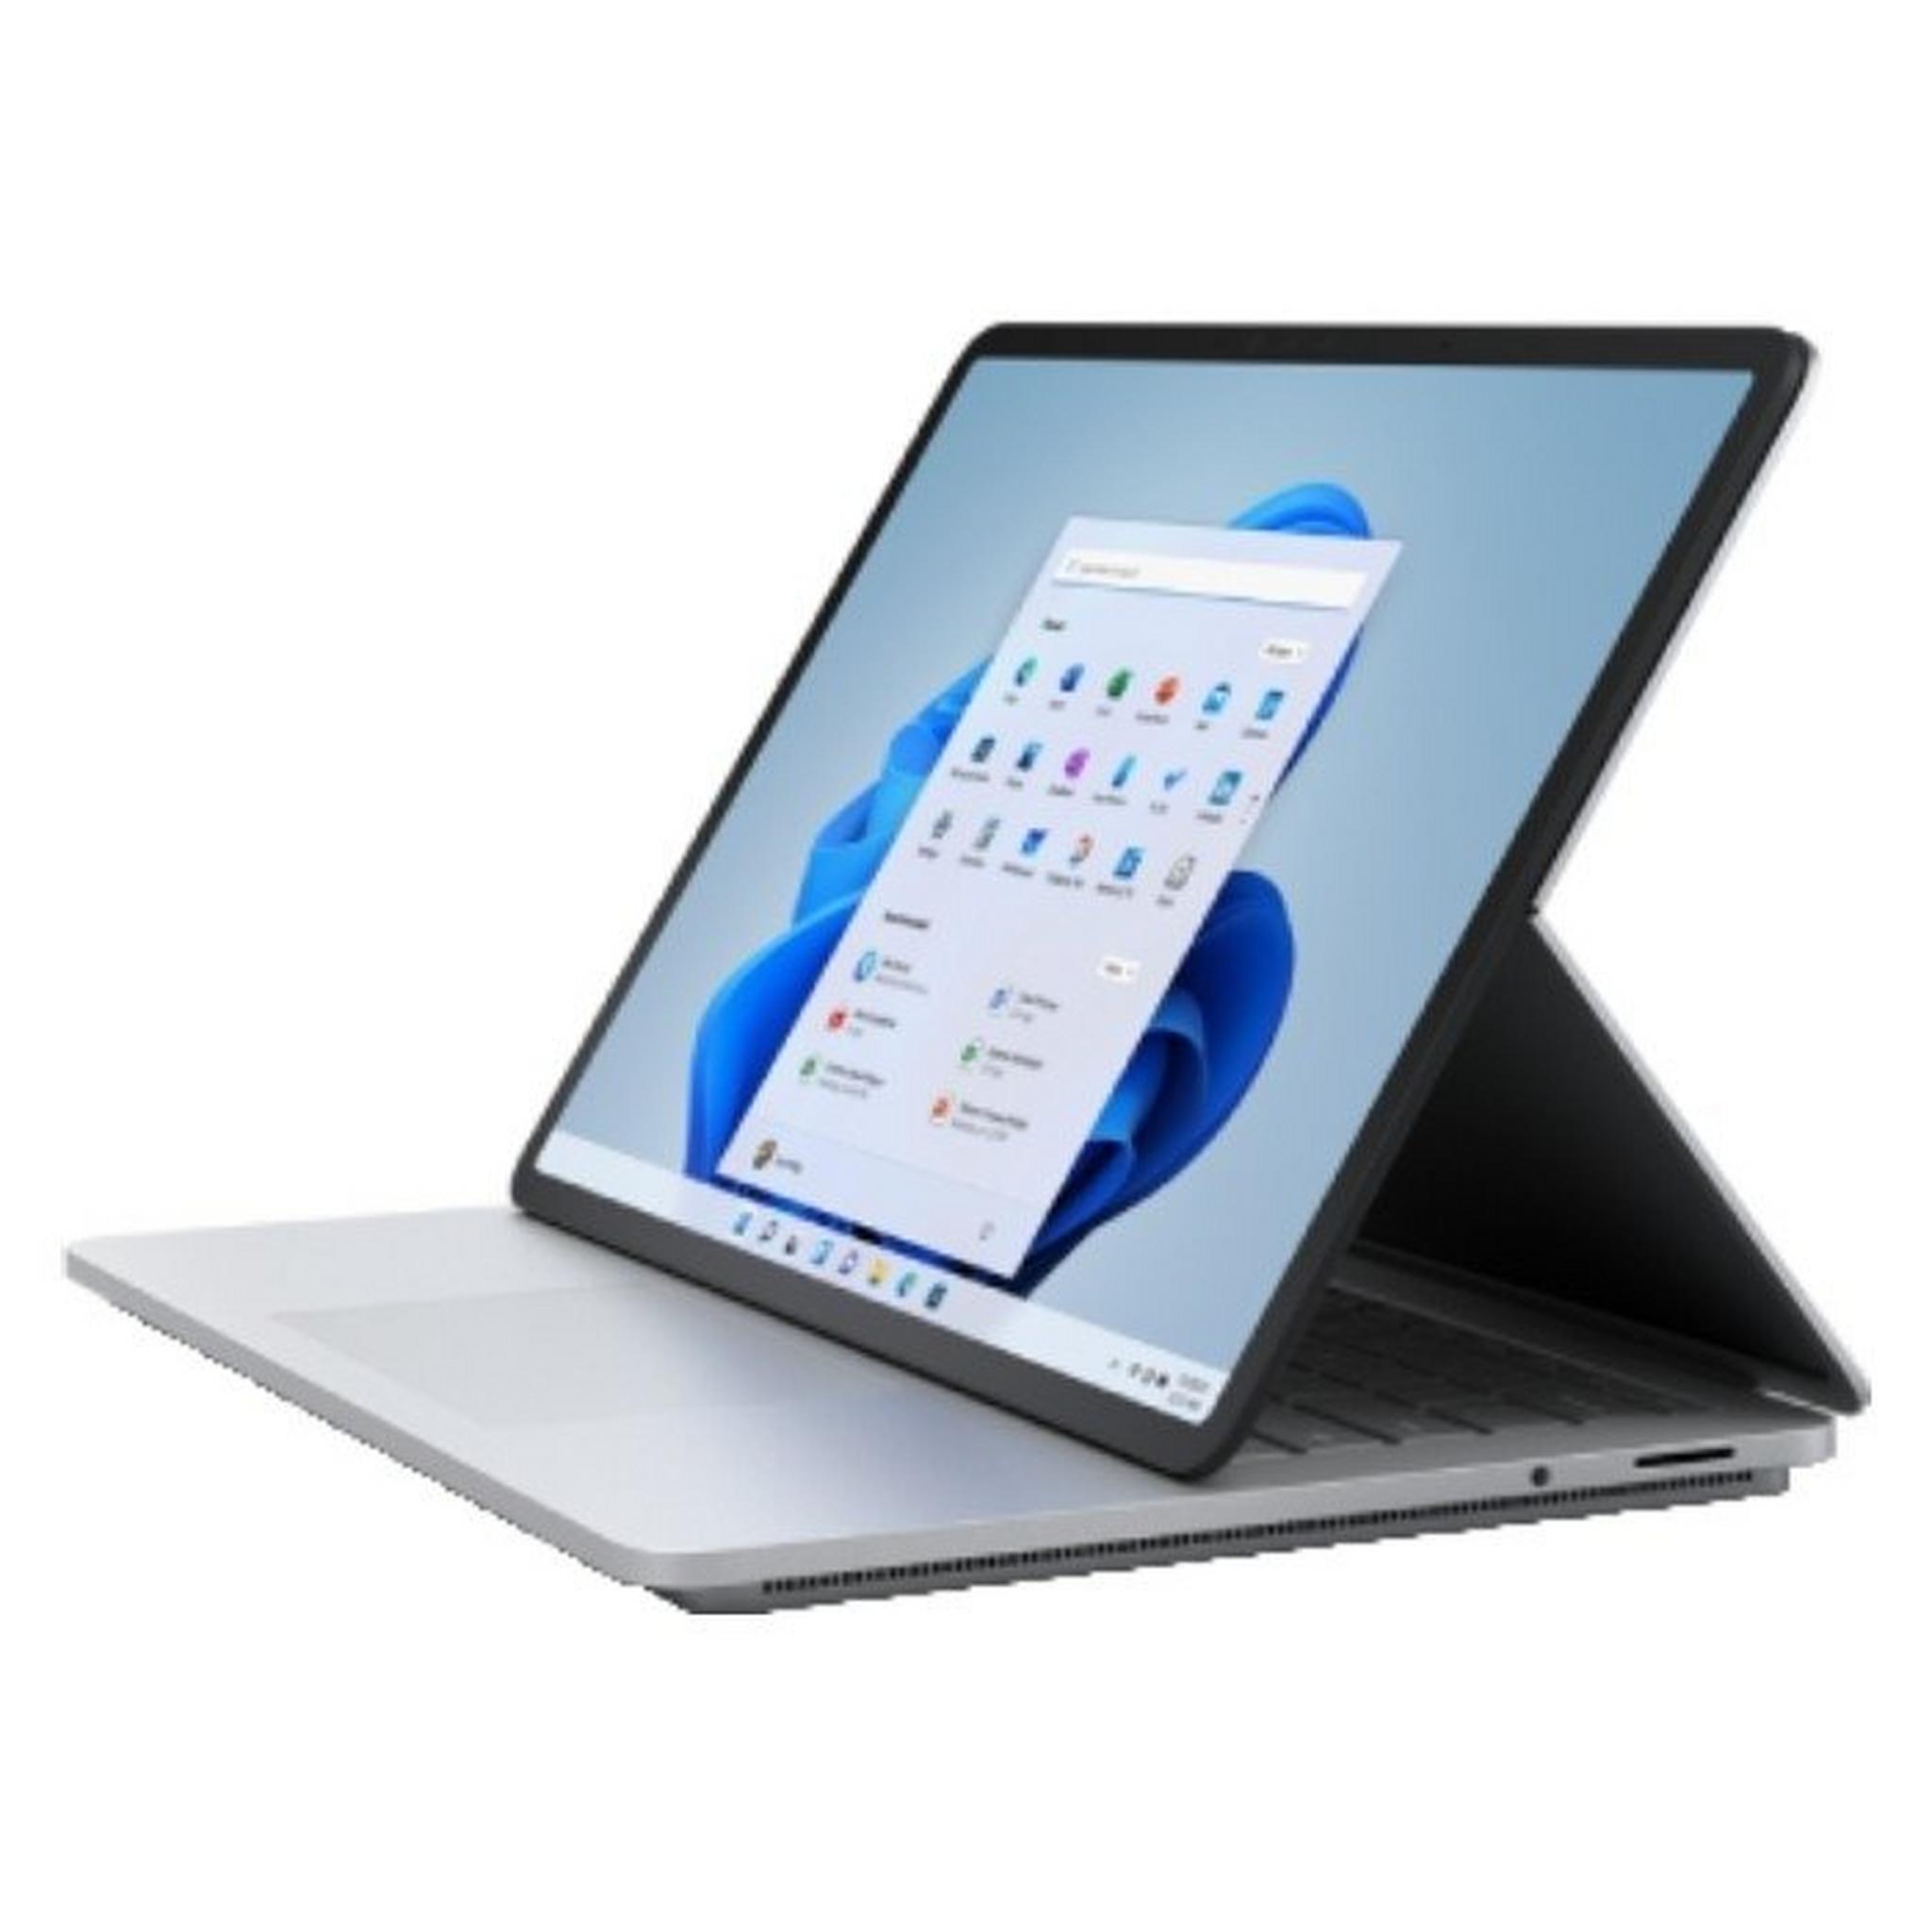 Microsoft Surface Studio Intel Core i7 11th Gen, 32GB RAM, 1TB SSD, 14-inch Convertible Laptop - Platinum